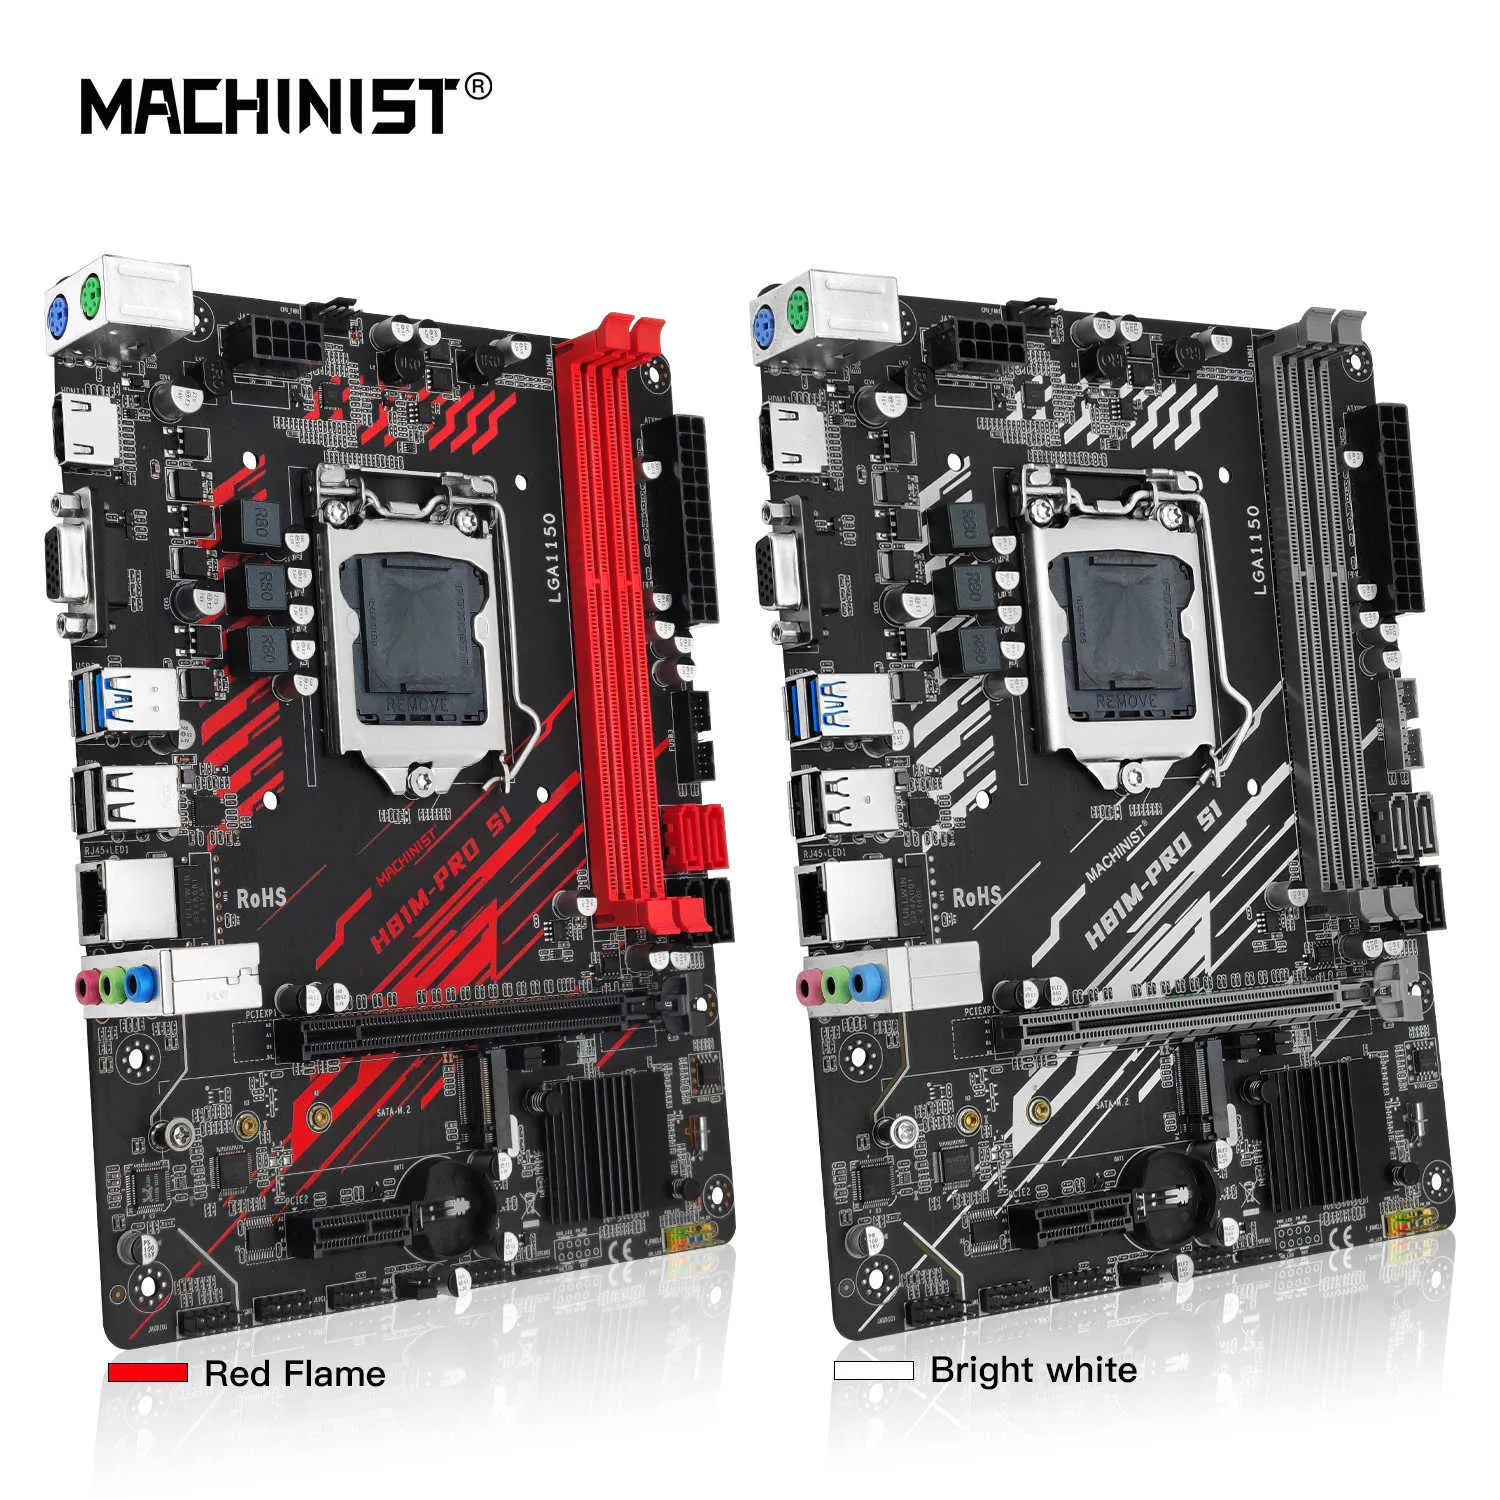 MACHINIST H81 Motherboard LGA 1150 NGFF M.2 Slot Support i3 i5 i7/Xeon E3 V3 Processor DDR3 RAM H81M-PRO S1 Mainboard